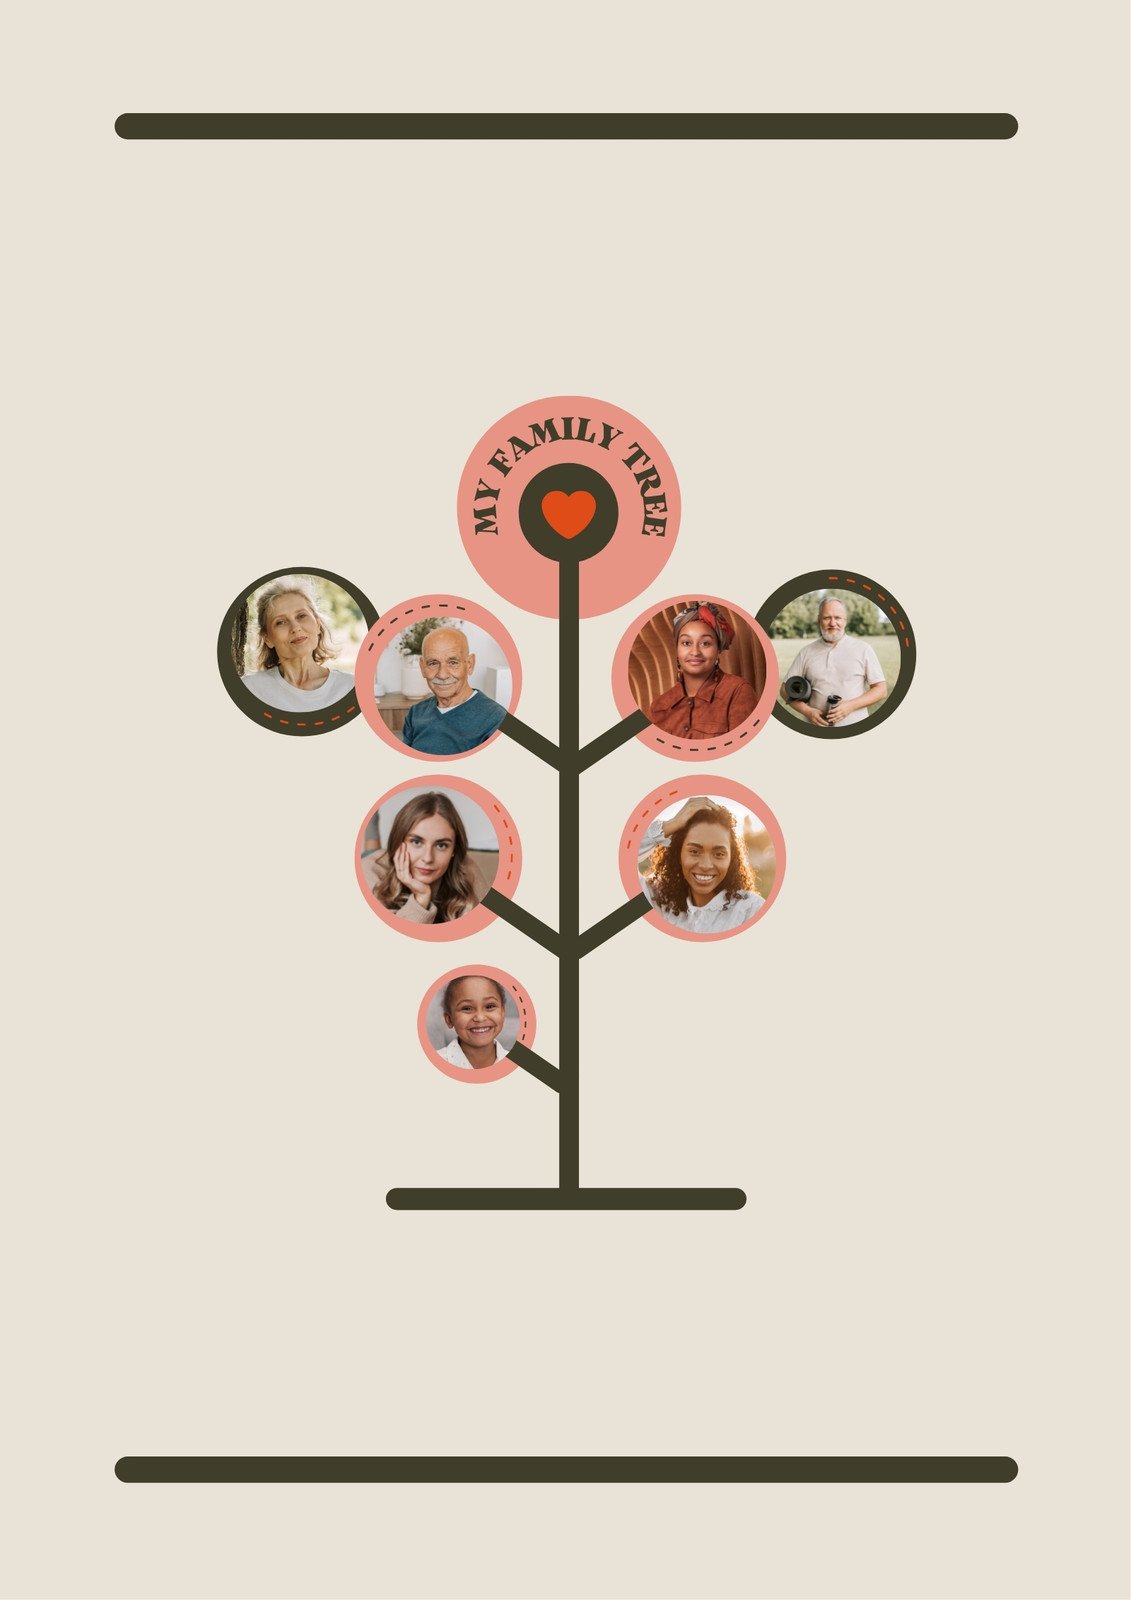 Digital Family Tree Template 7 Generations Editable in Canva 7GEN KOFI 